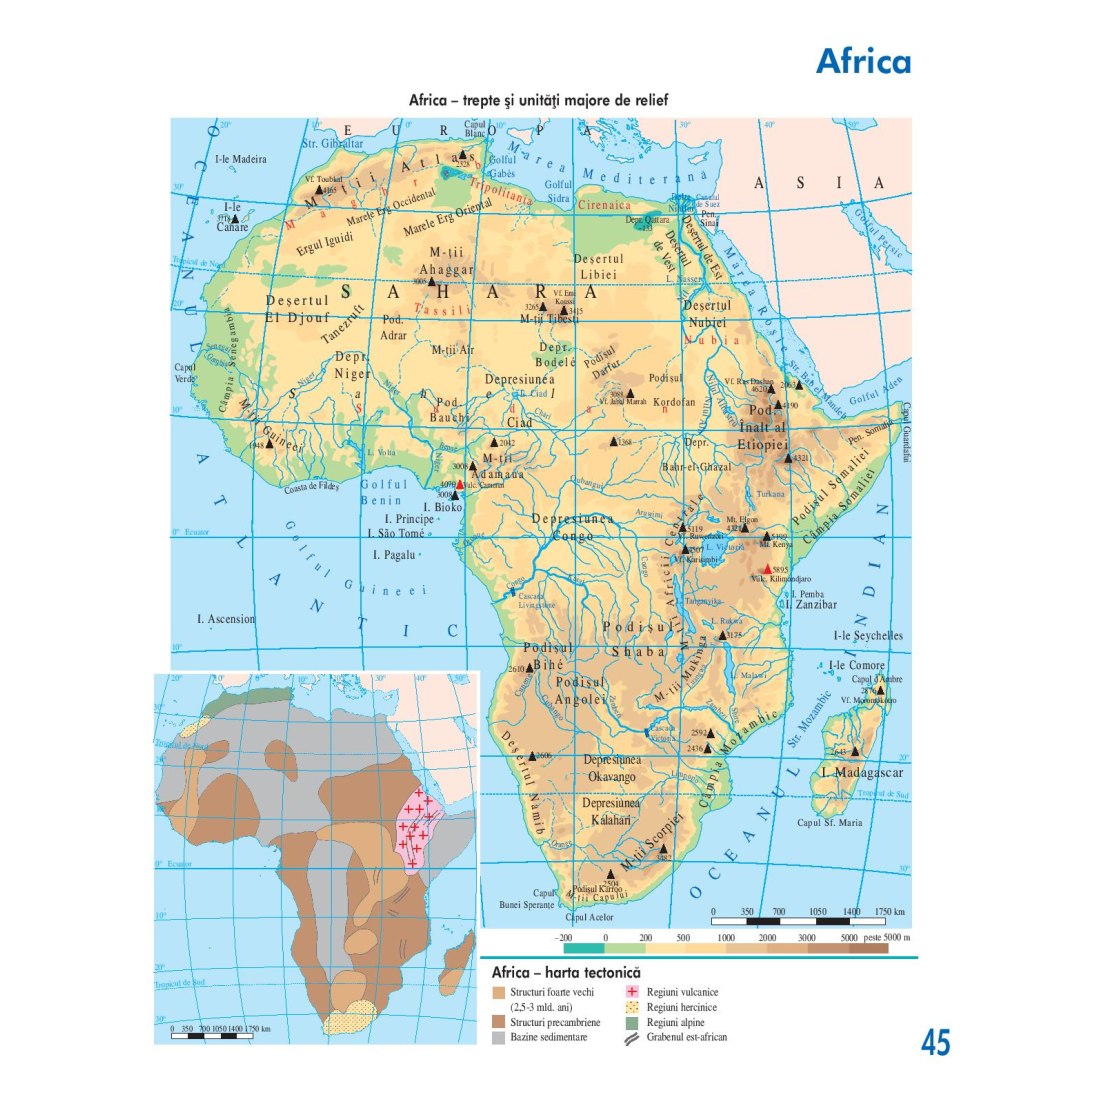 Atlas geografic general